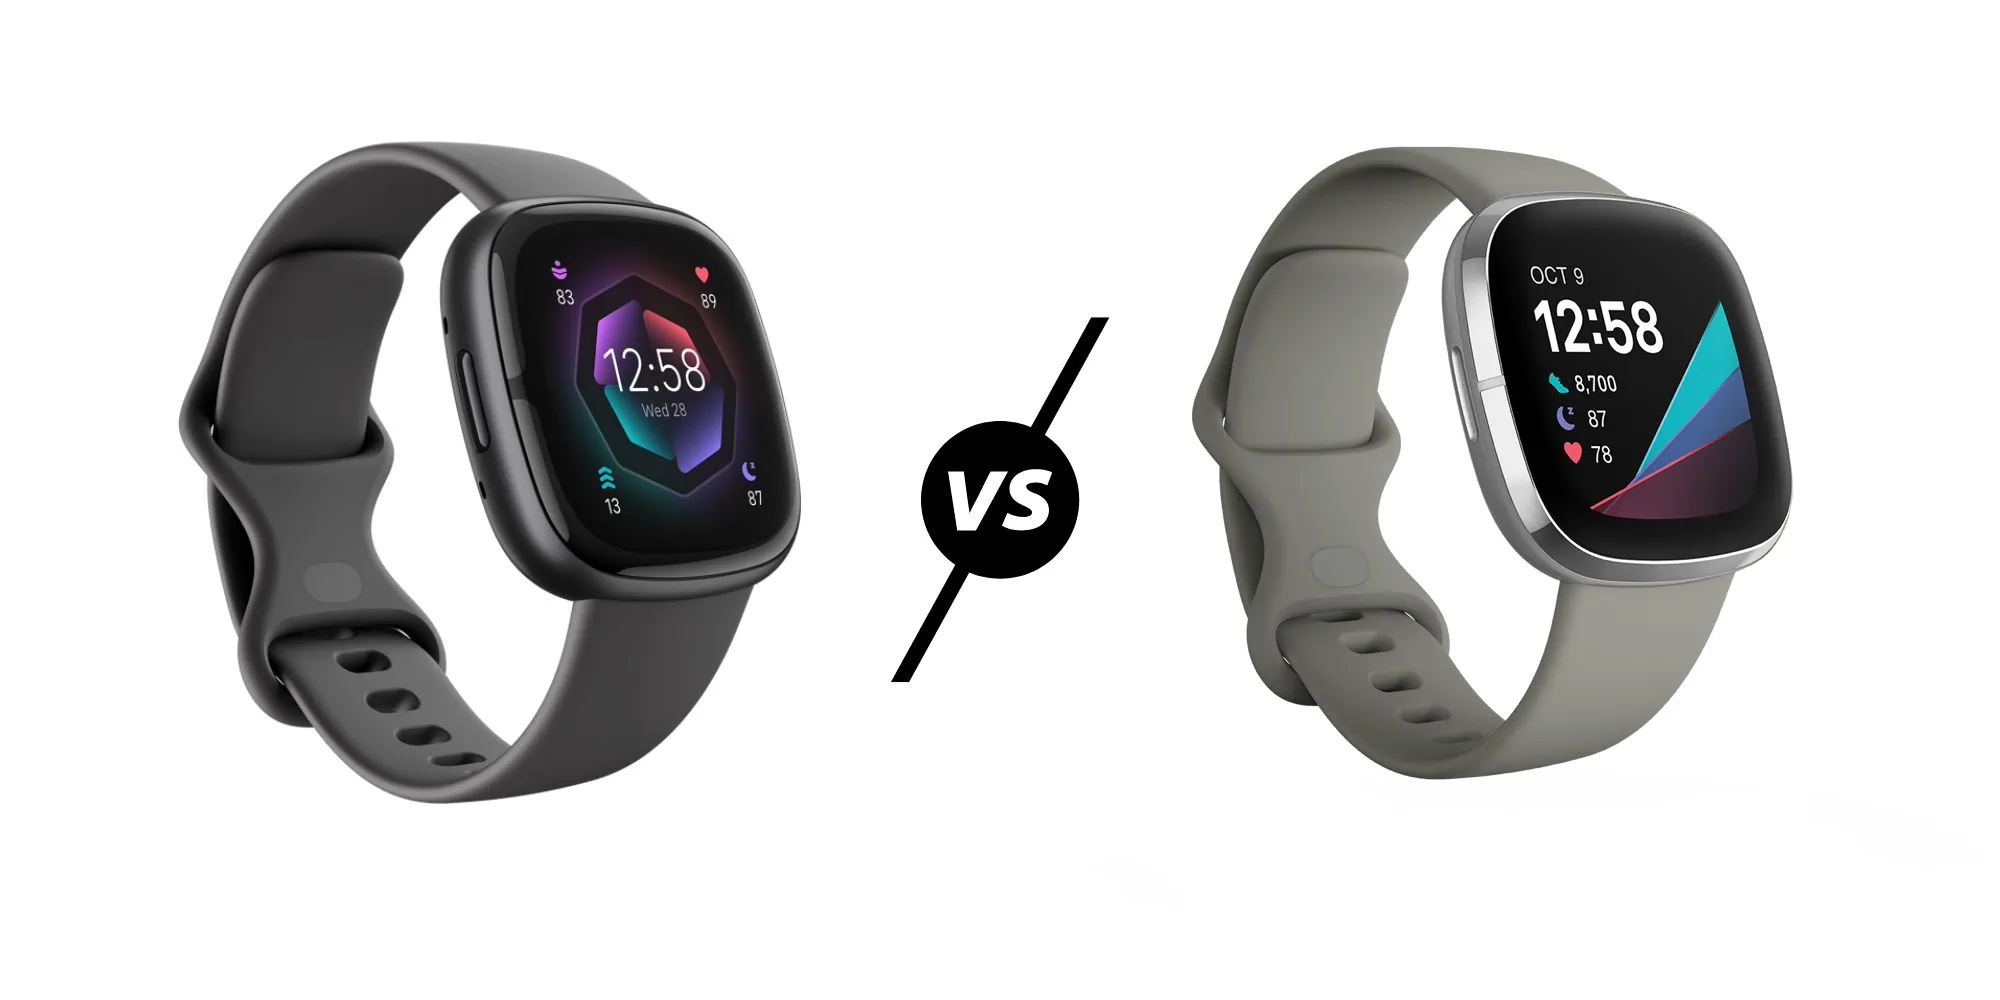 Fitbit Sense 2 vs Original Fitbit Sense Compared – What’s changed?